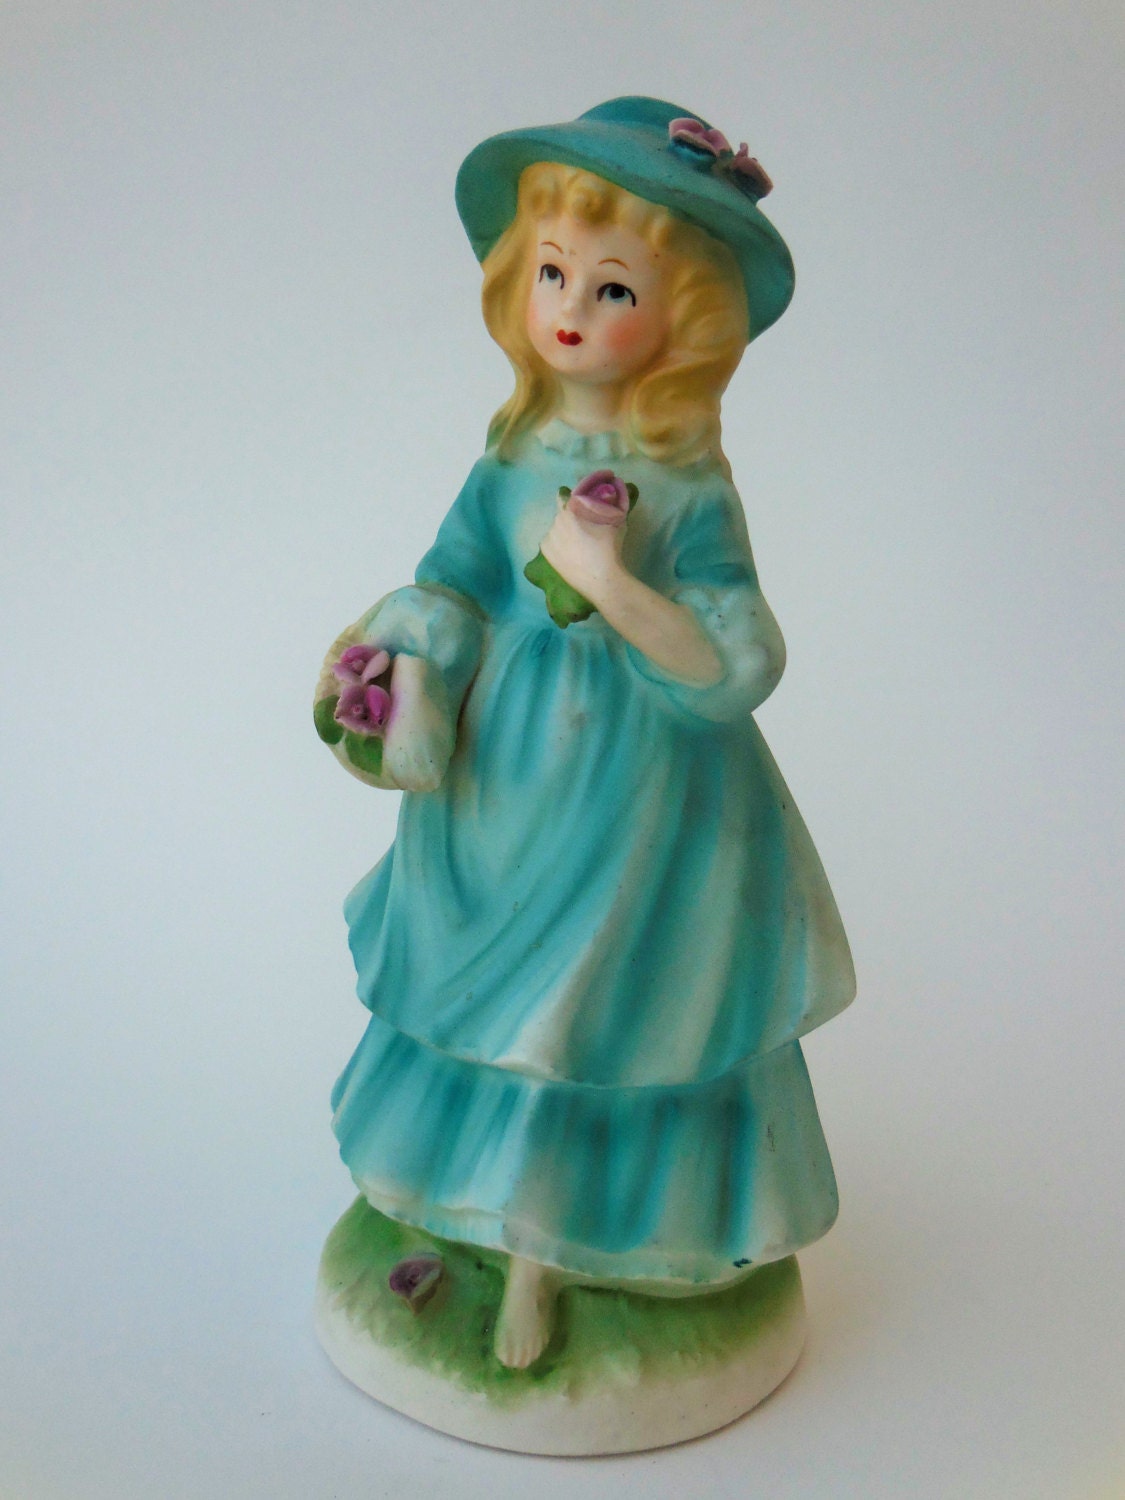 Avon Jennifer collectible figurine vintage 1973 porcelain